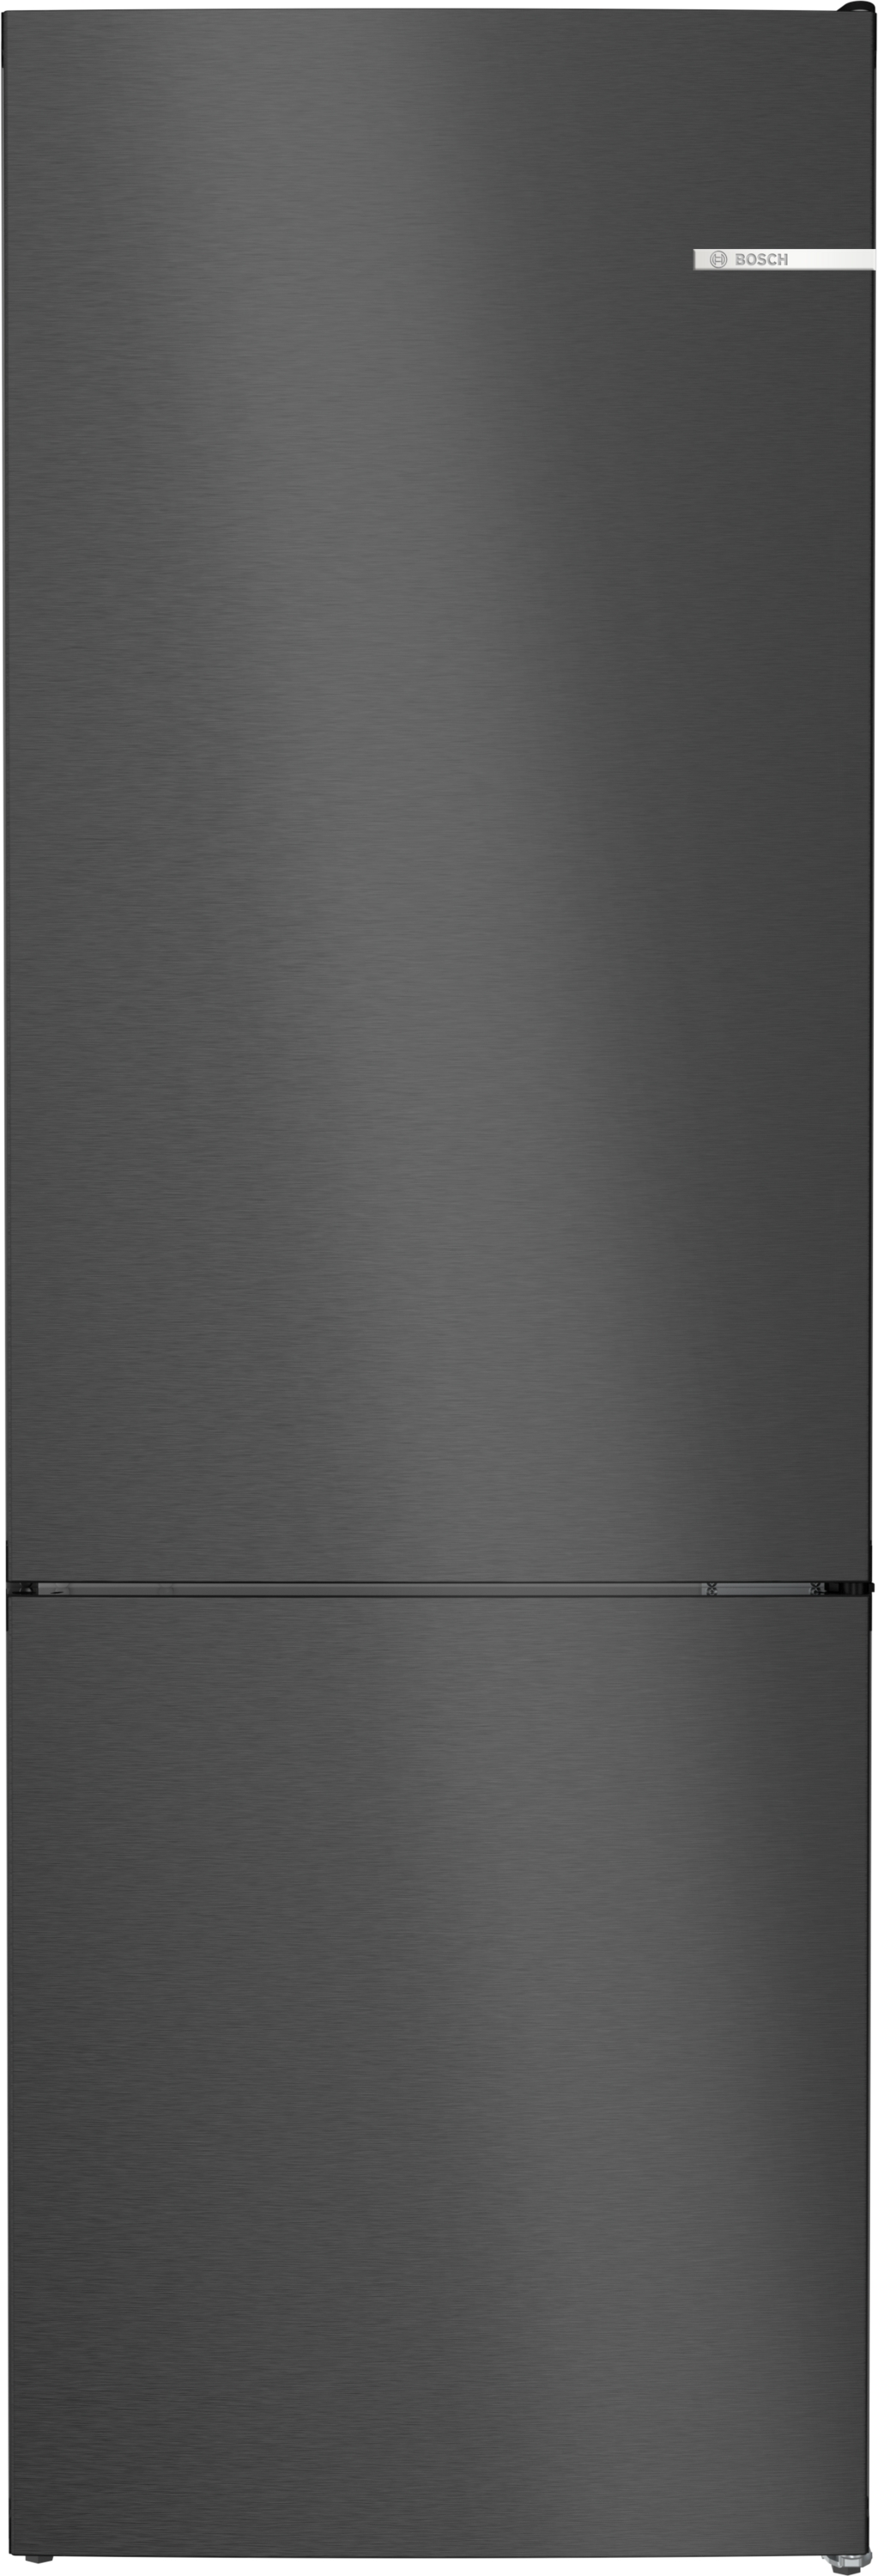 Bosch KGN492XCF  free-standing fridge-freezer with freezer at bottom